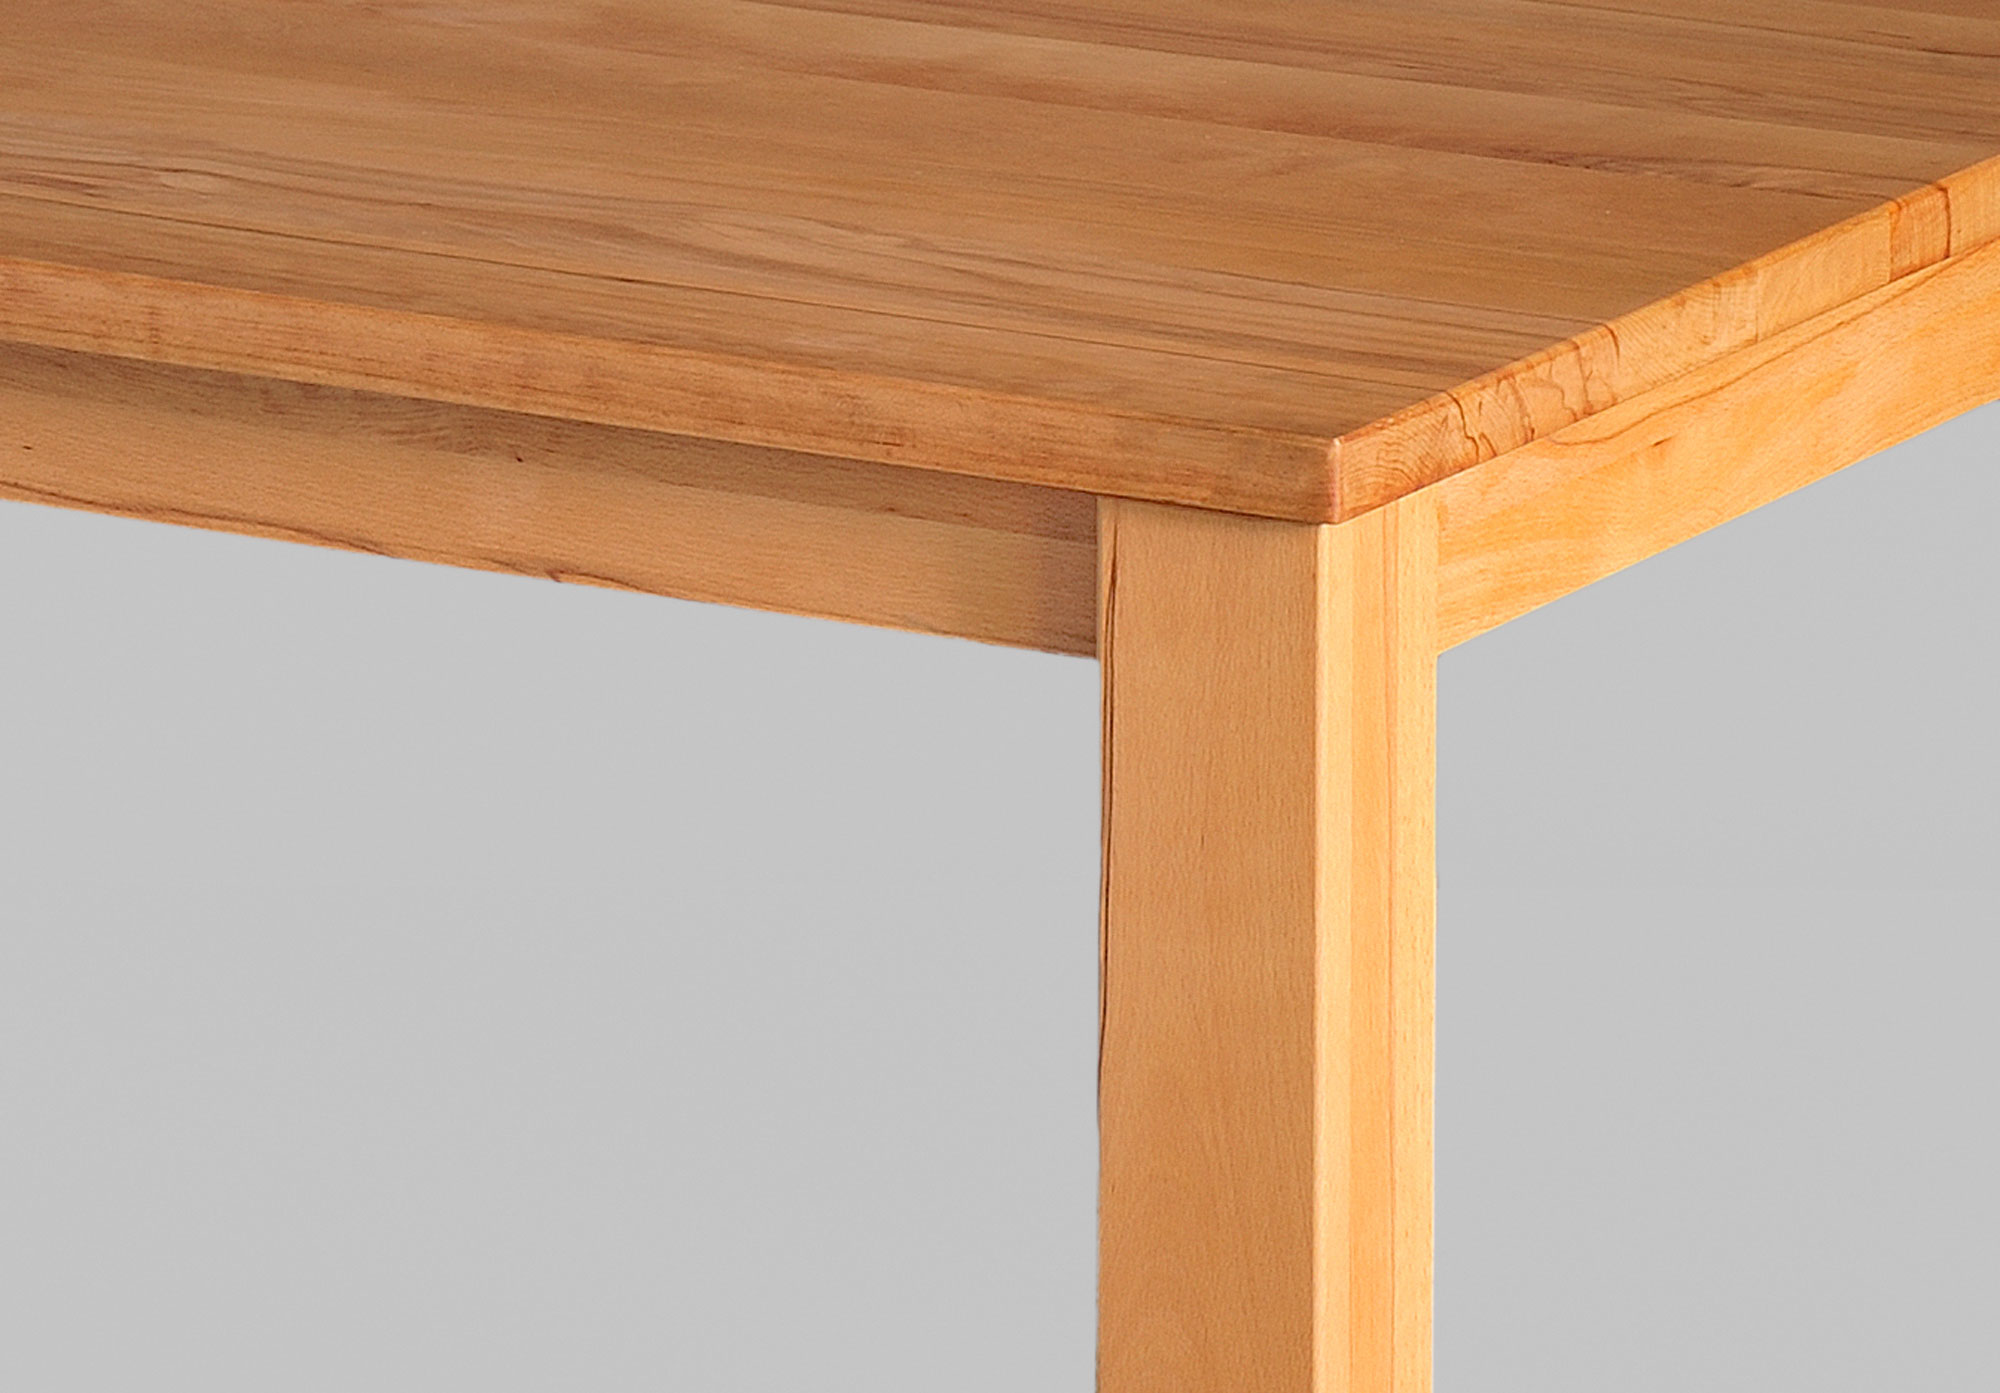 Tailor-Made Wood Table FORTE 3 B9X9 f3b9EKBU1660cutA custom made in solid wood by vitamin design